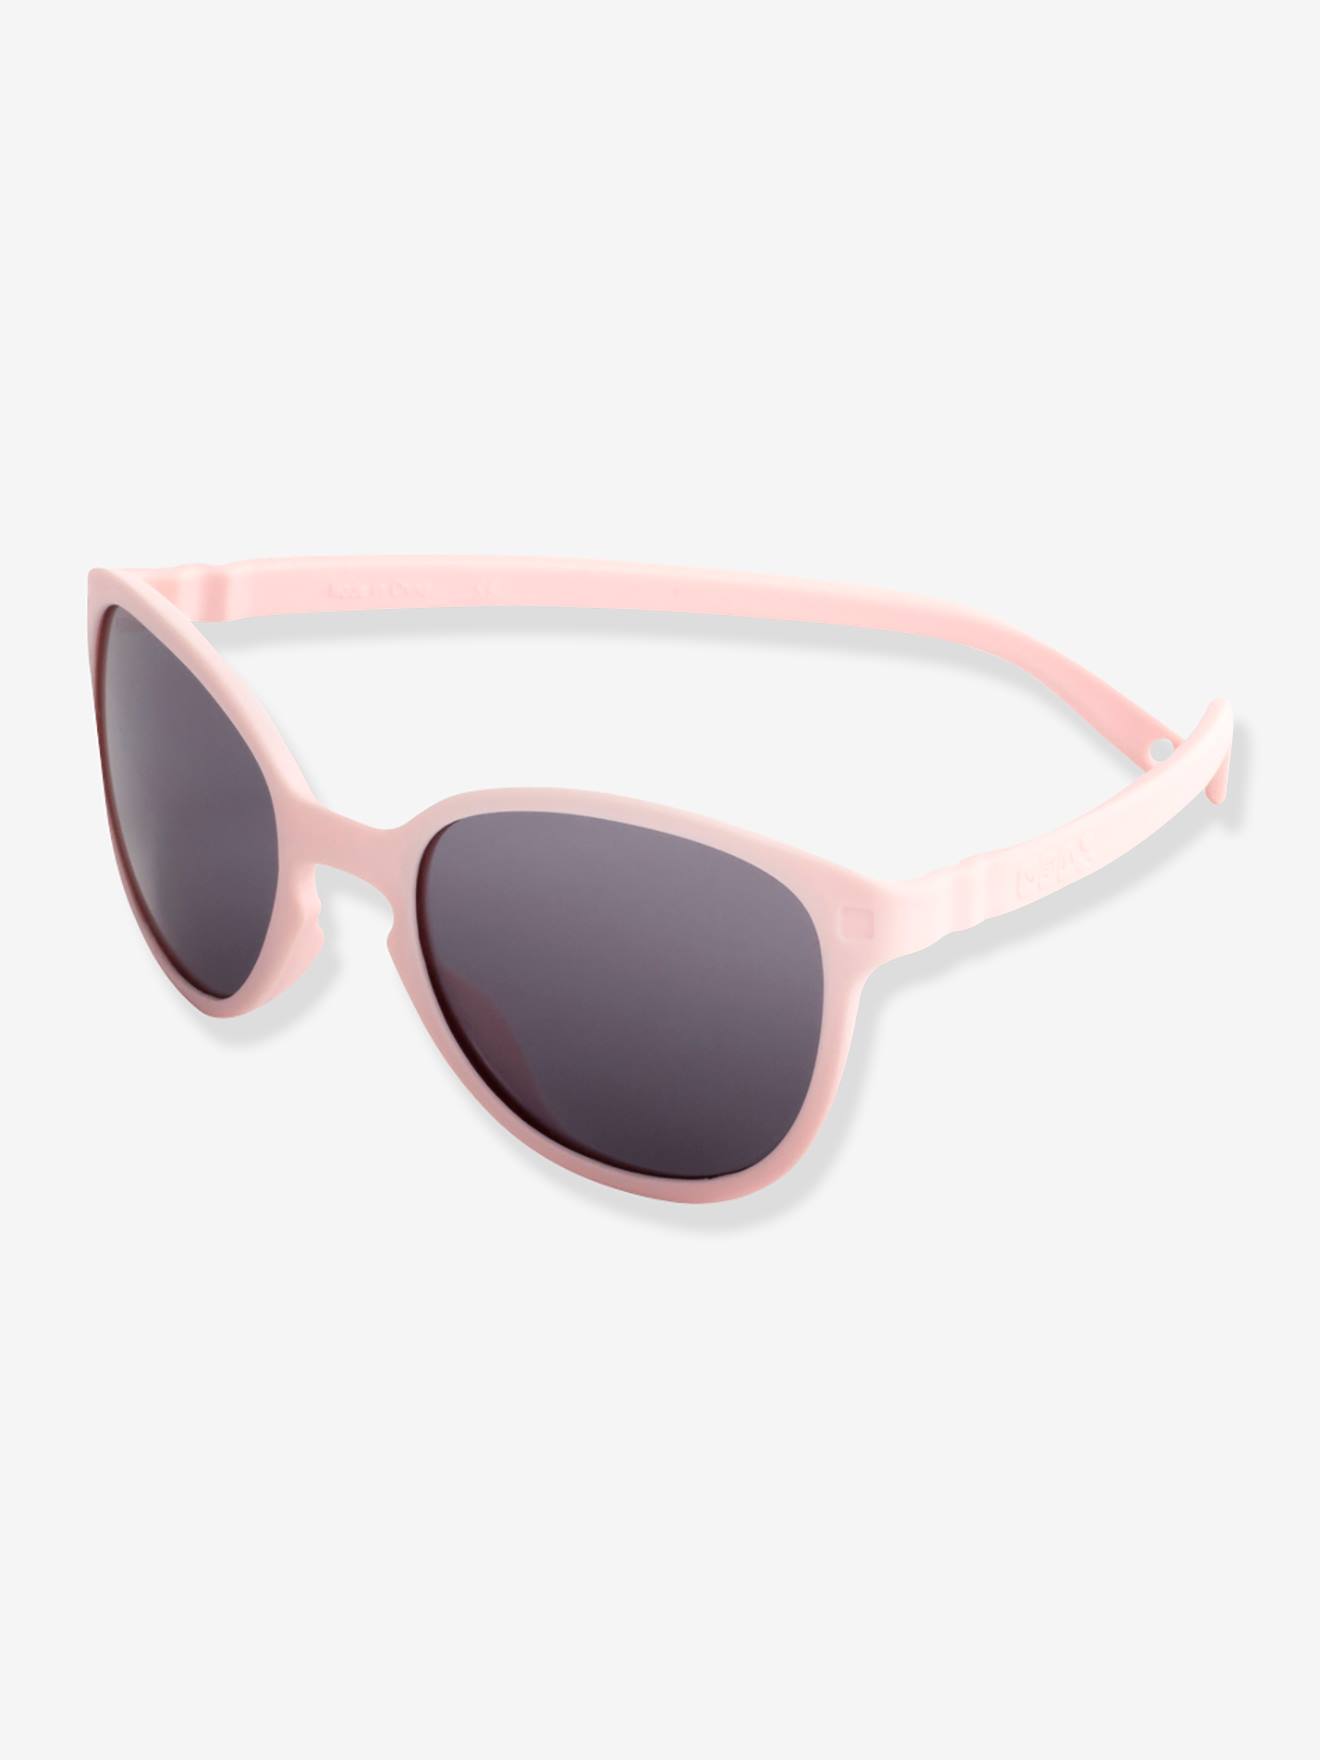 Sunglasses, Wazz by KI ET LA nude pink